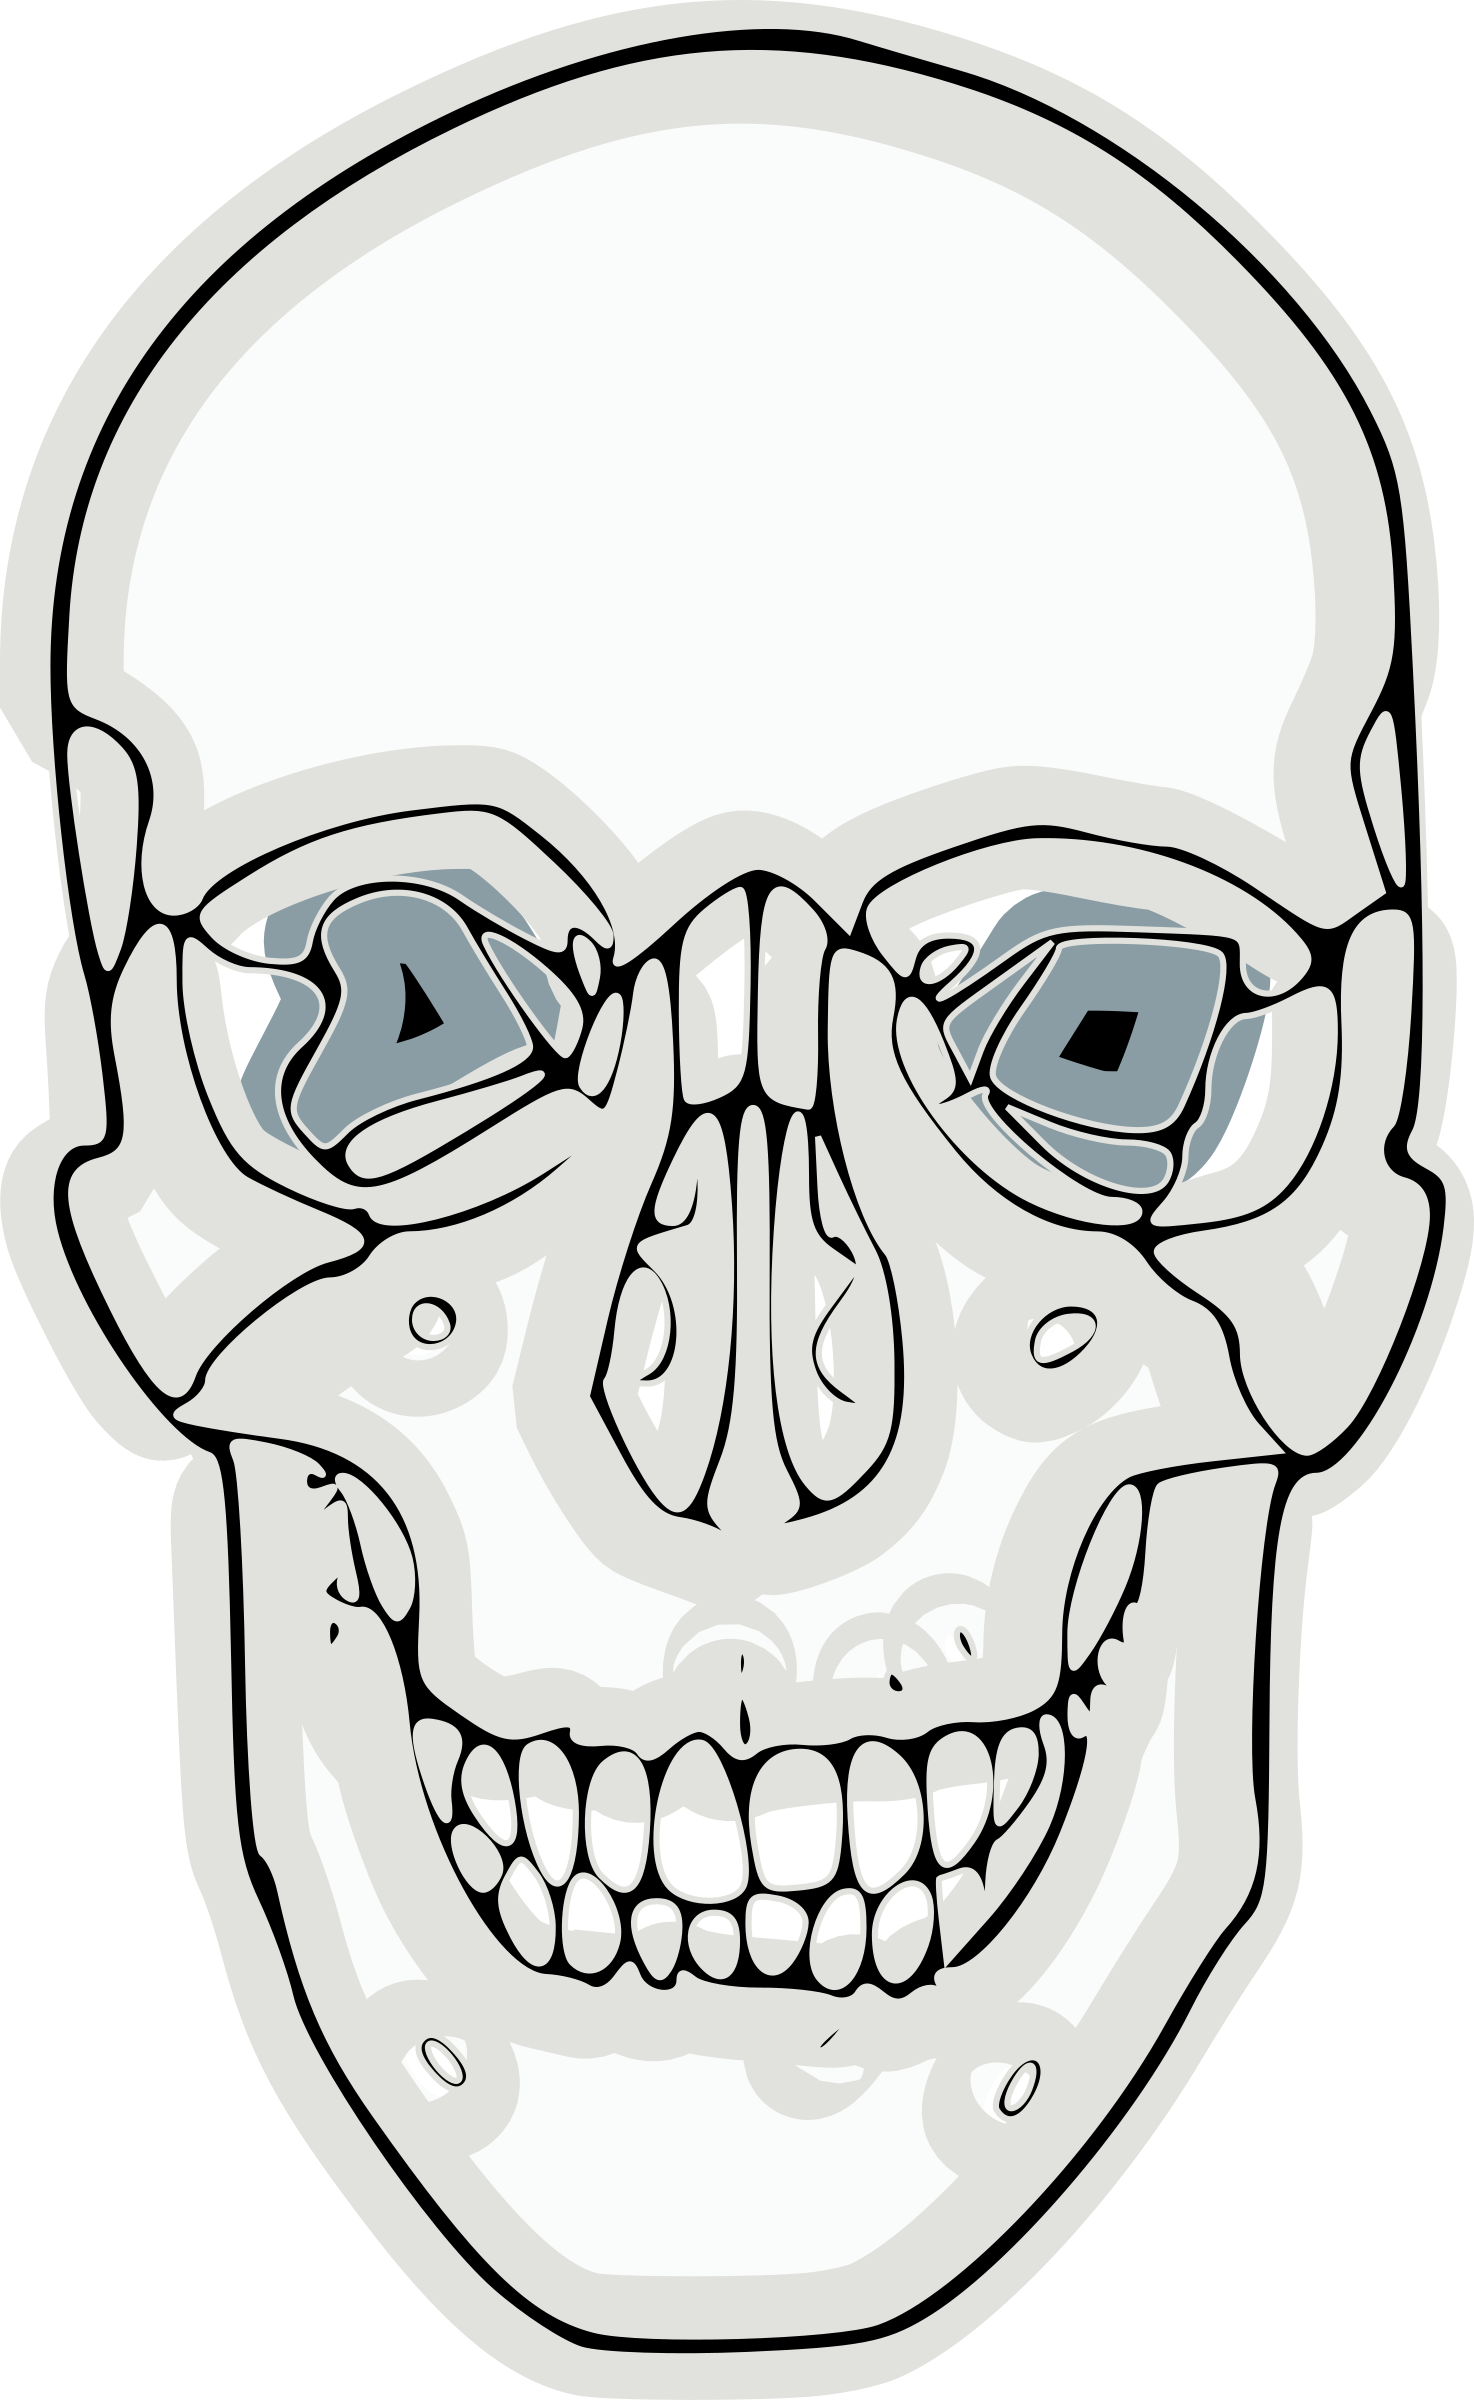 Digitalized Human Skull By Rg1024